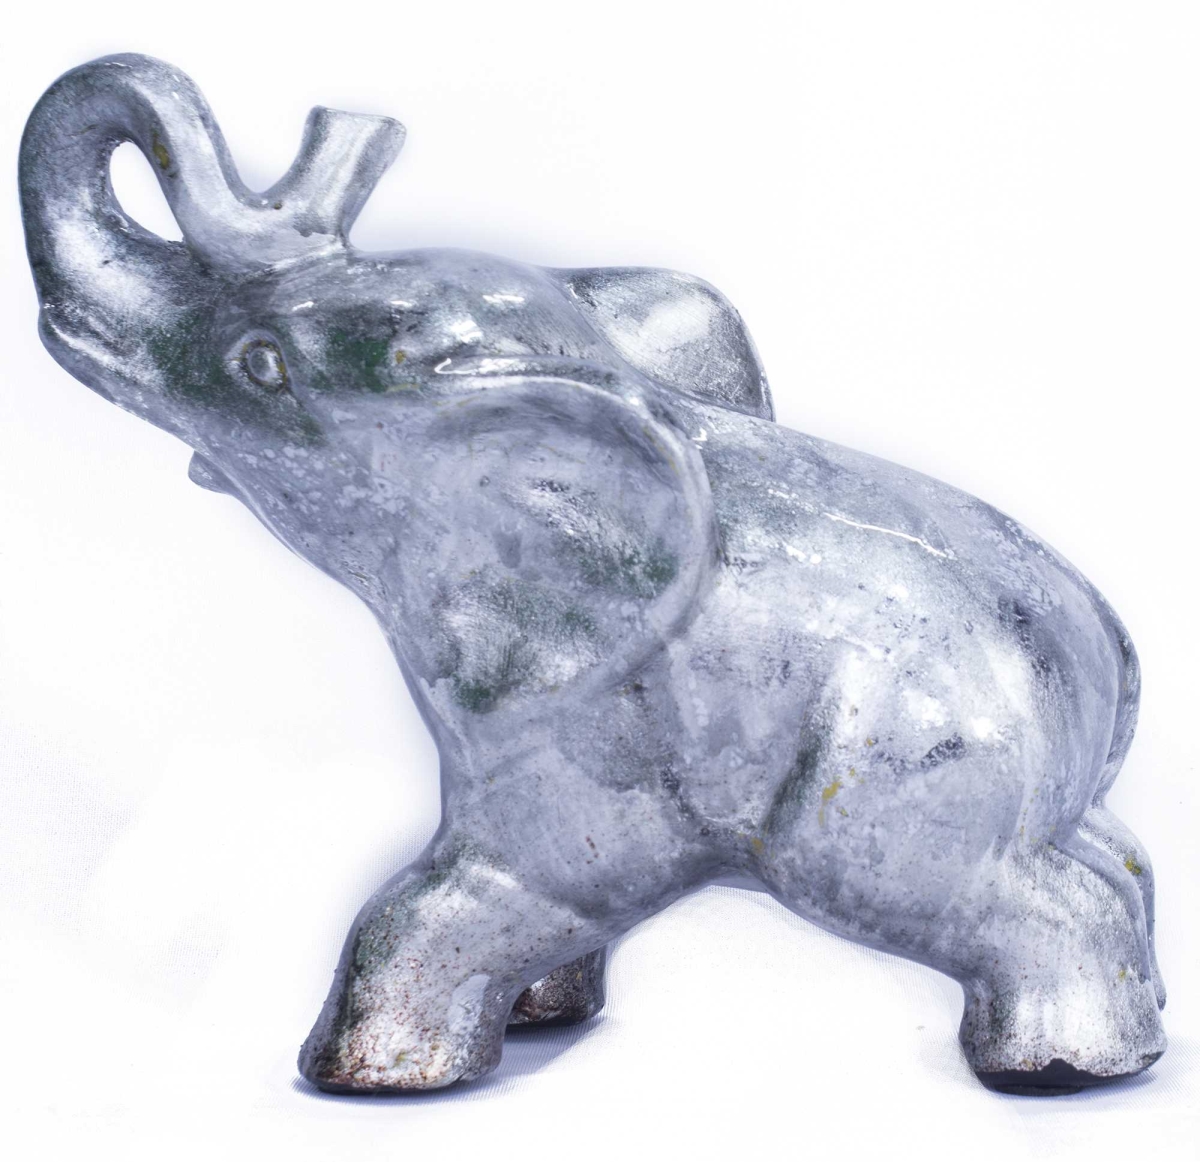 319656 8 In. Decorative Ceramic Elephant - Silver